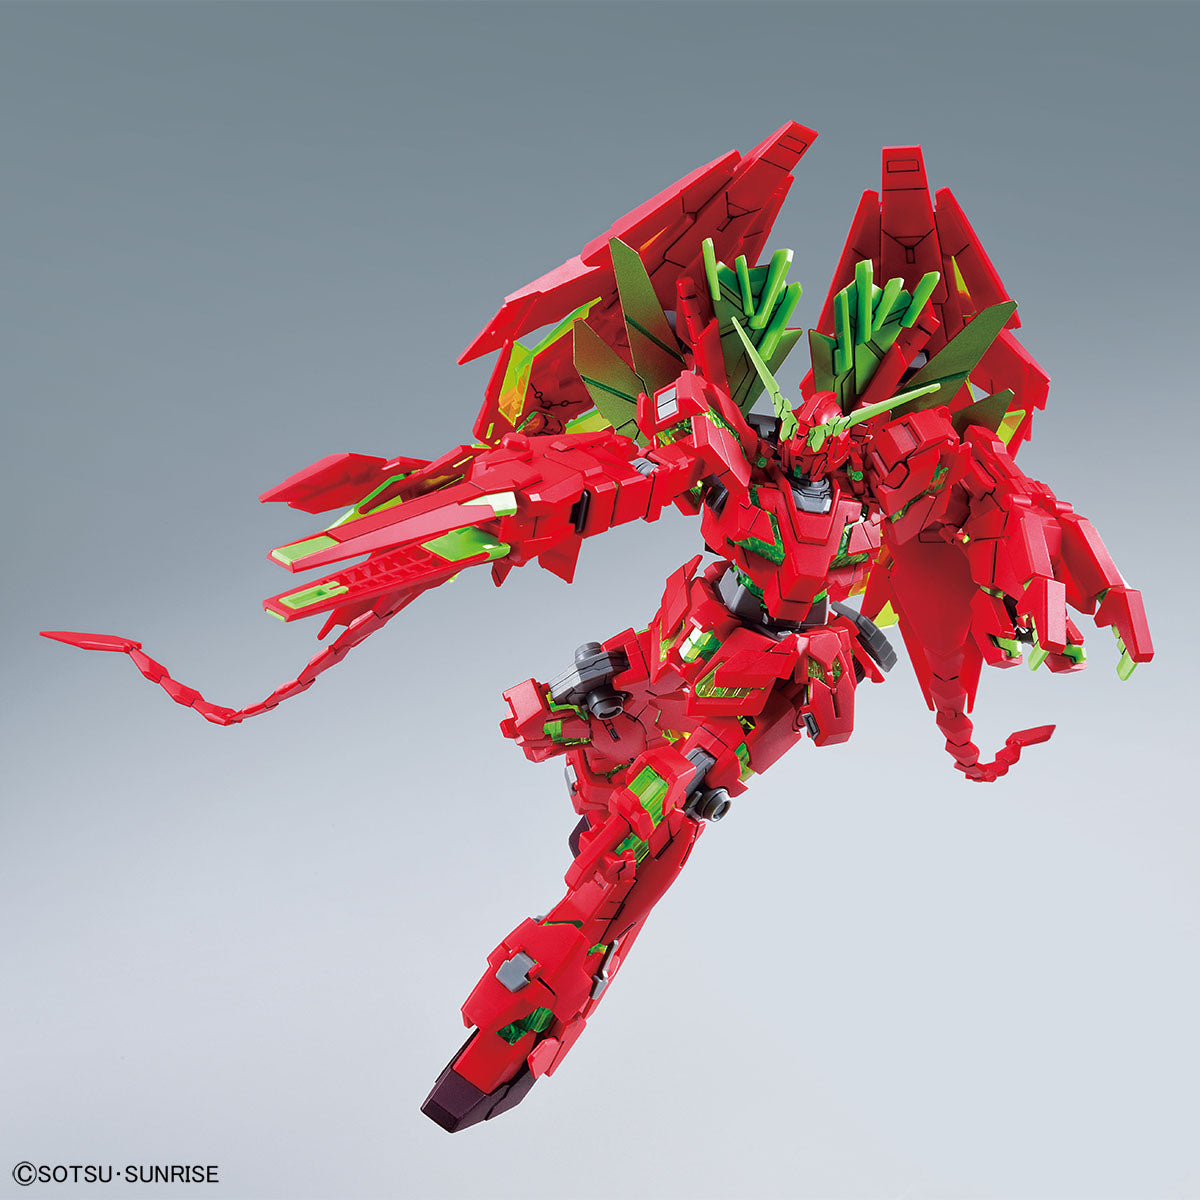 Gundam Base Limited HG Unicorn Gundam Perfectibility (Destroy Mode) (Final Battle Specification) Ver GSF